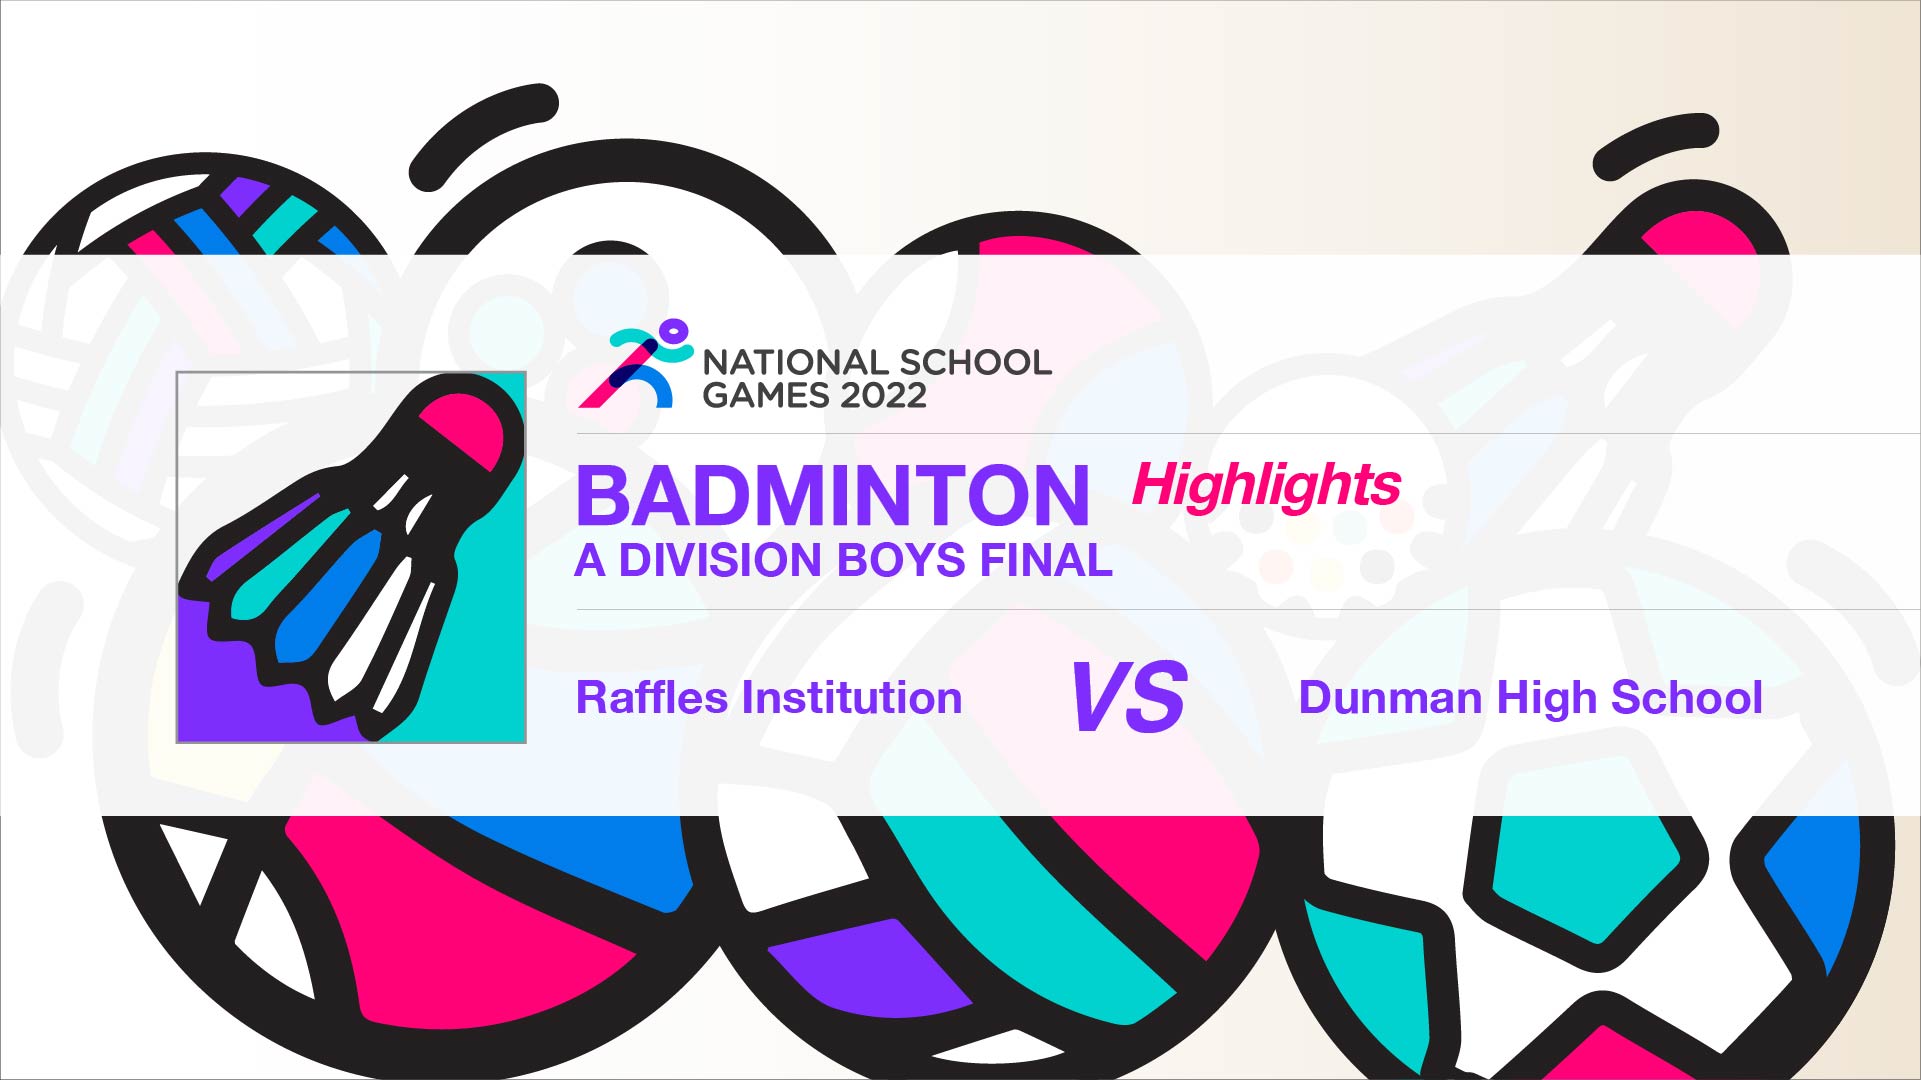 SSSC Badminton A Division Boys Final | Raffles Institution vs Dunman High School - Highlights